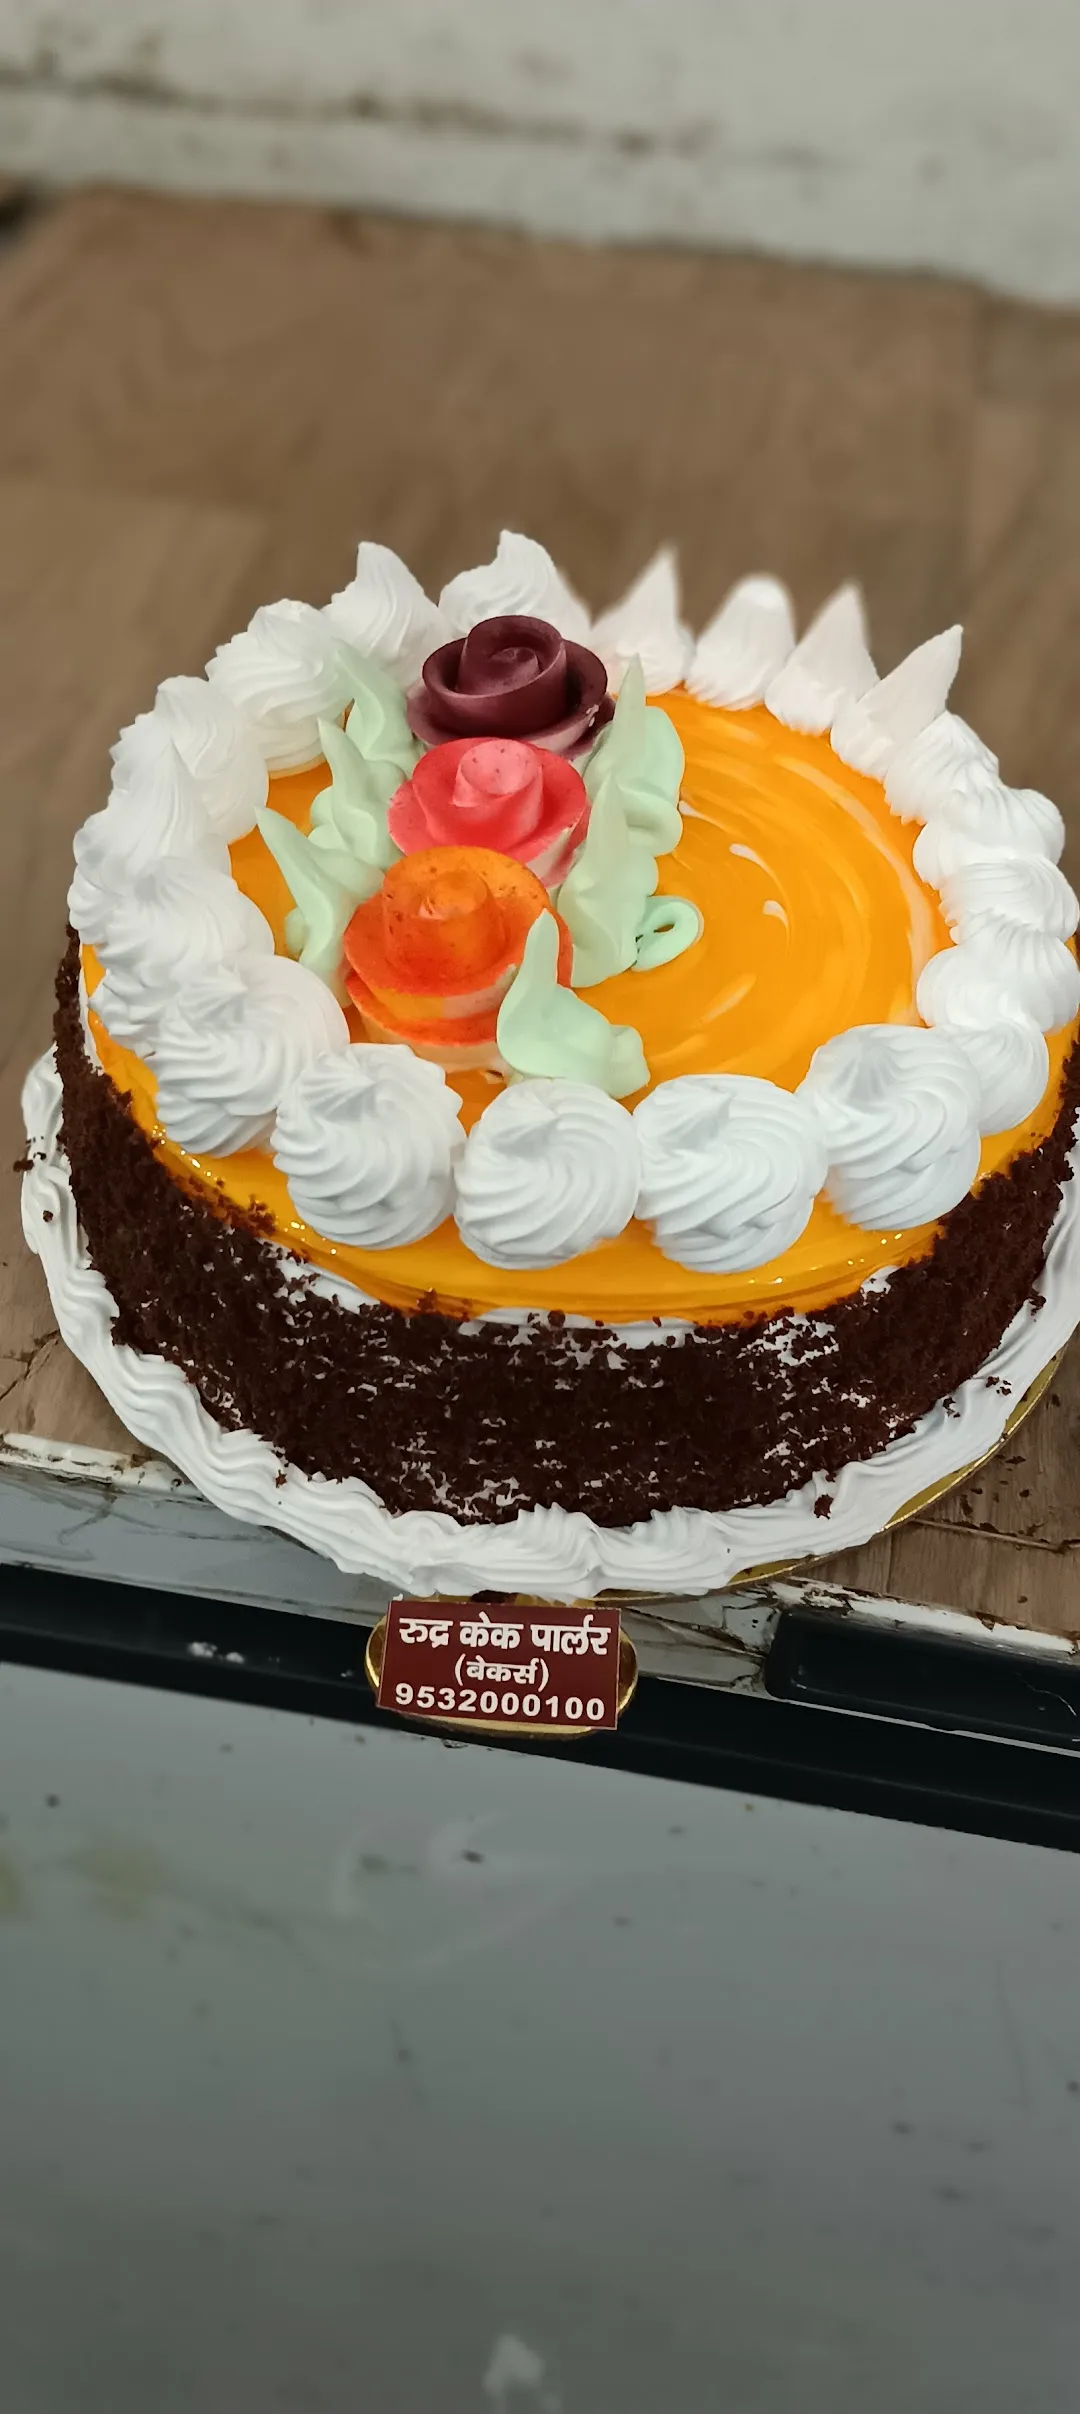 Cake paradise in Sigra,Varanasi - Best Cake Shops in Varanasi - Justdial